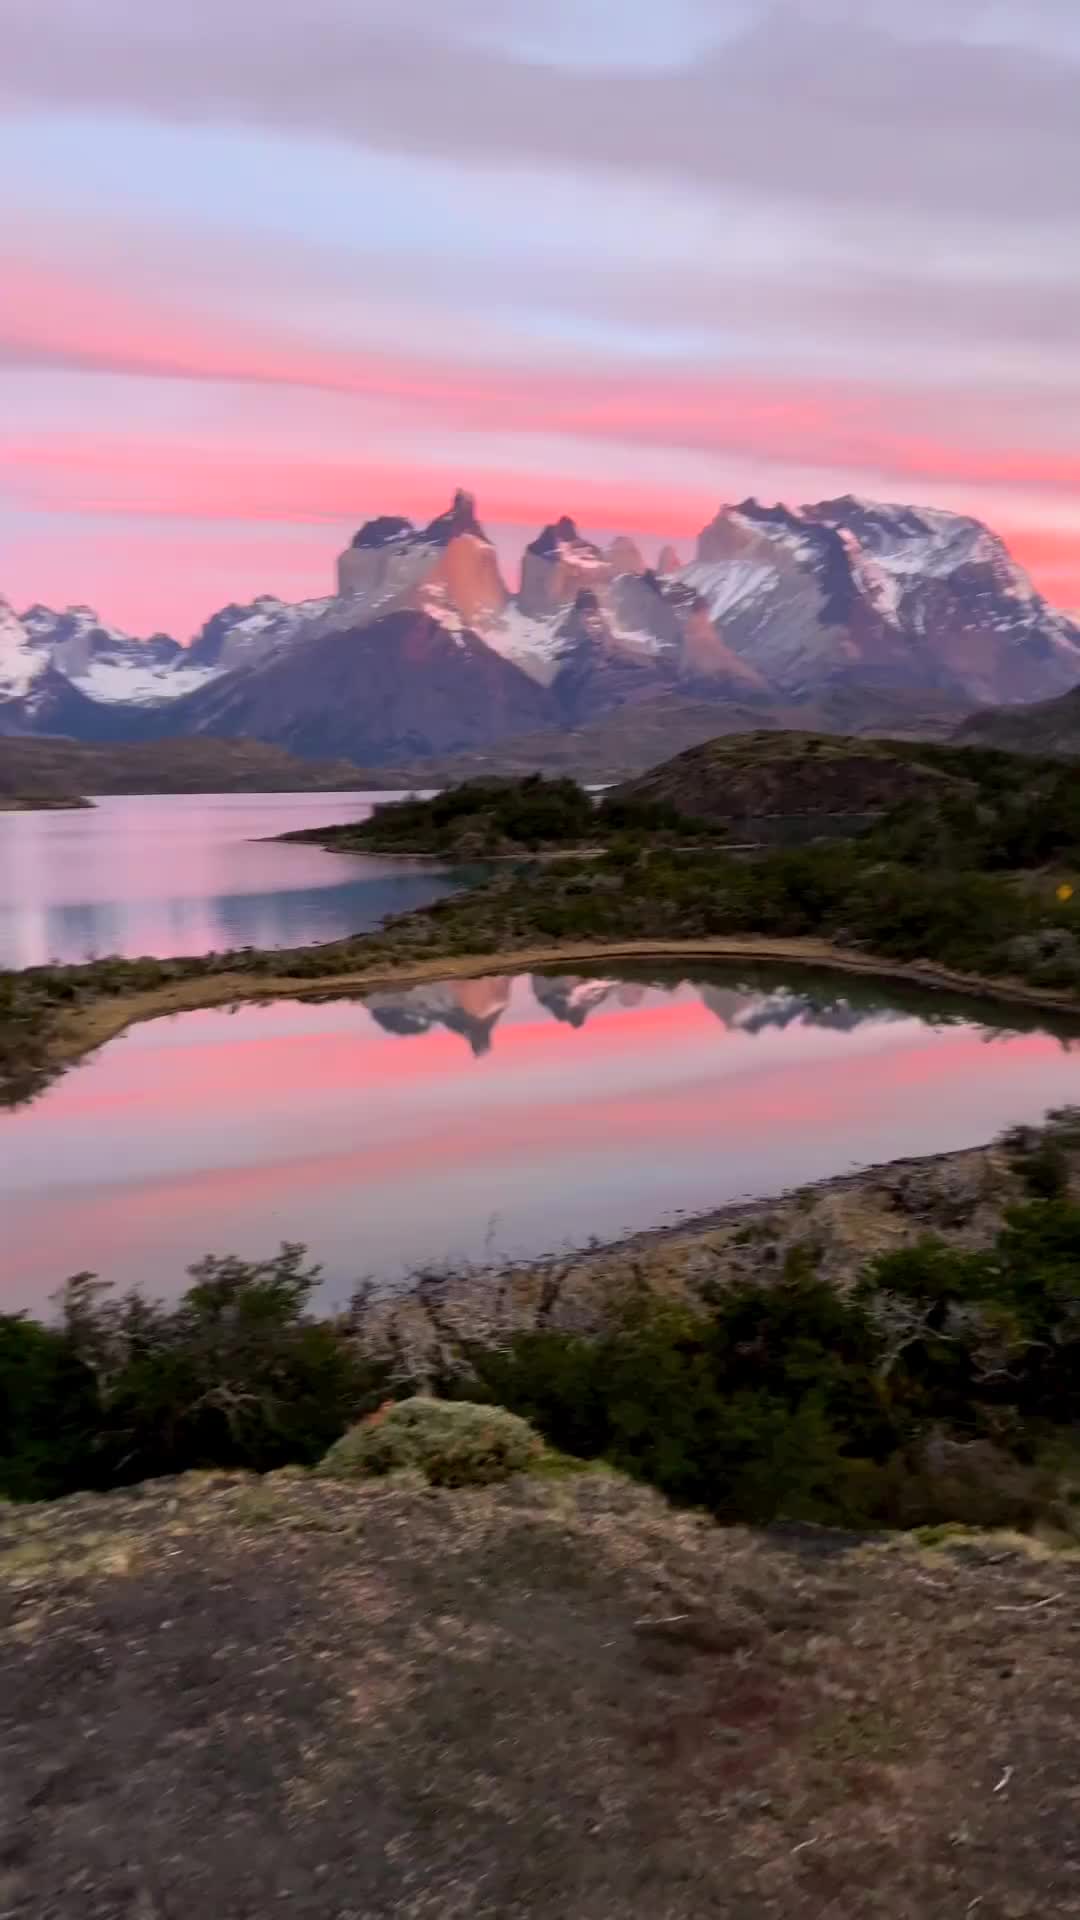 Amanecer 🌅 
La magia de la Patagonia 

#torresdelpaine